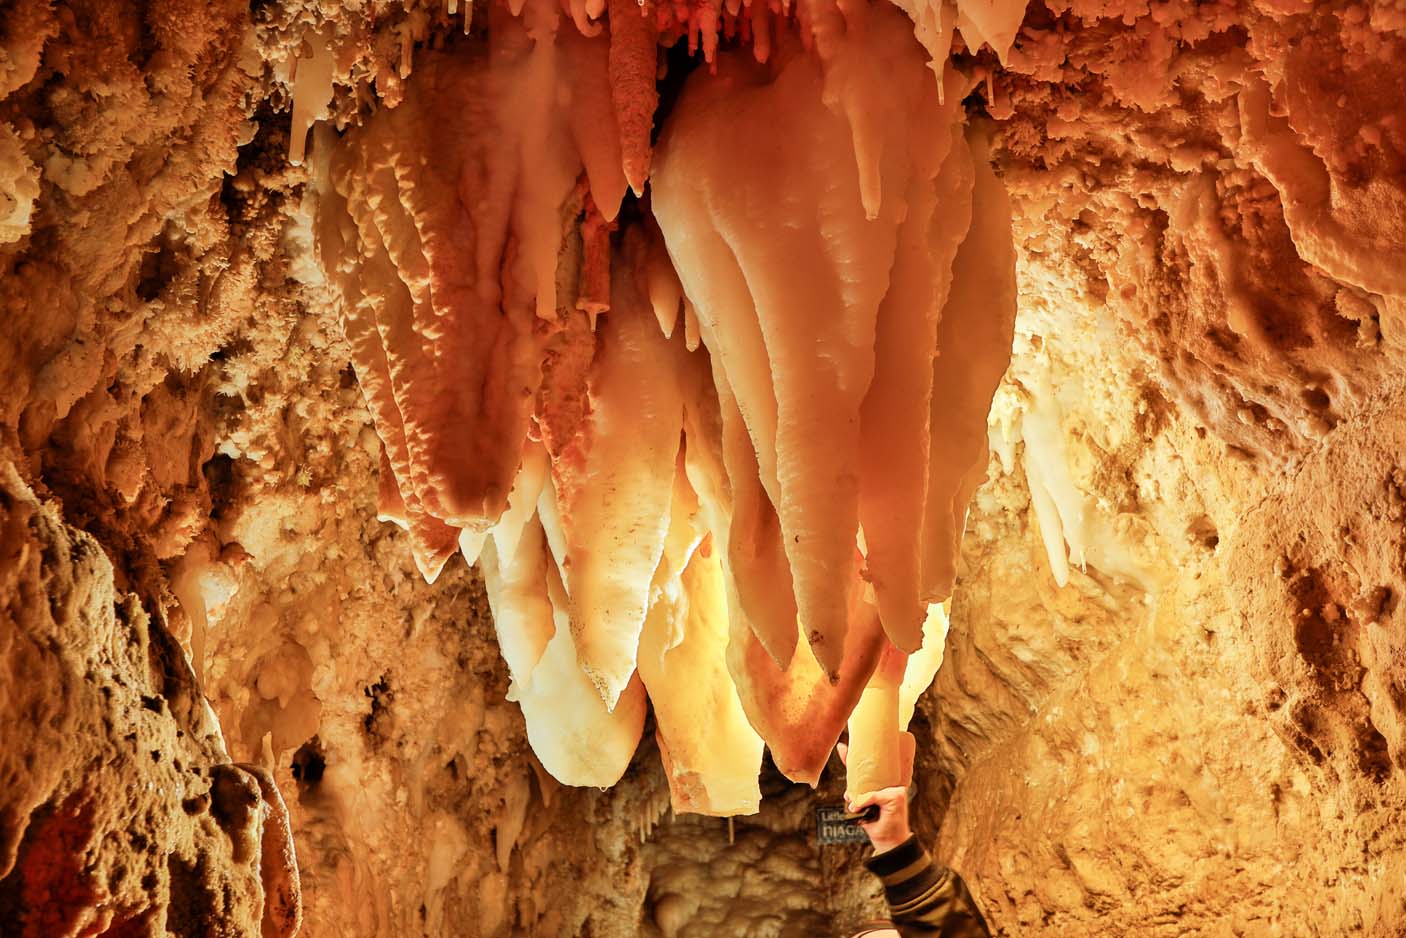 Crystal Lake Cave, IA